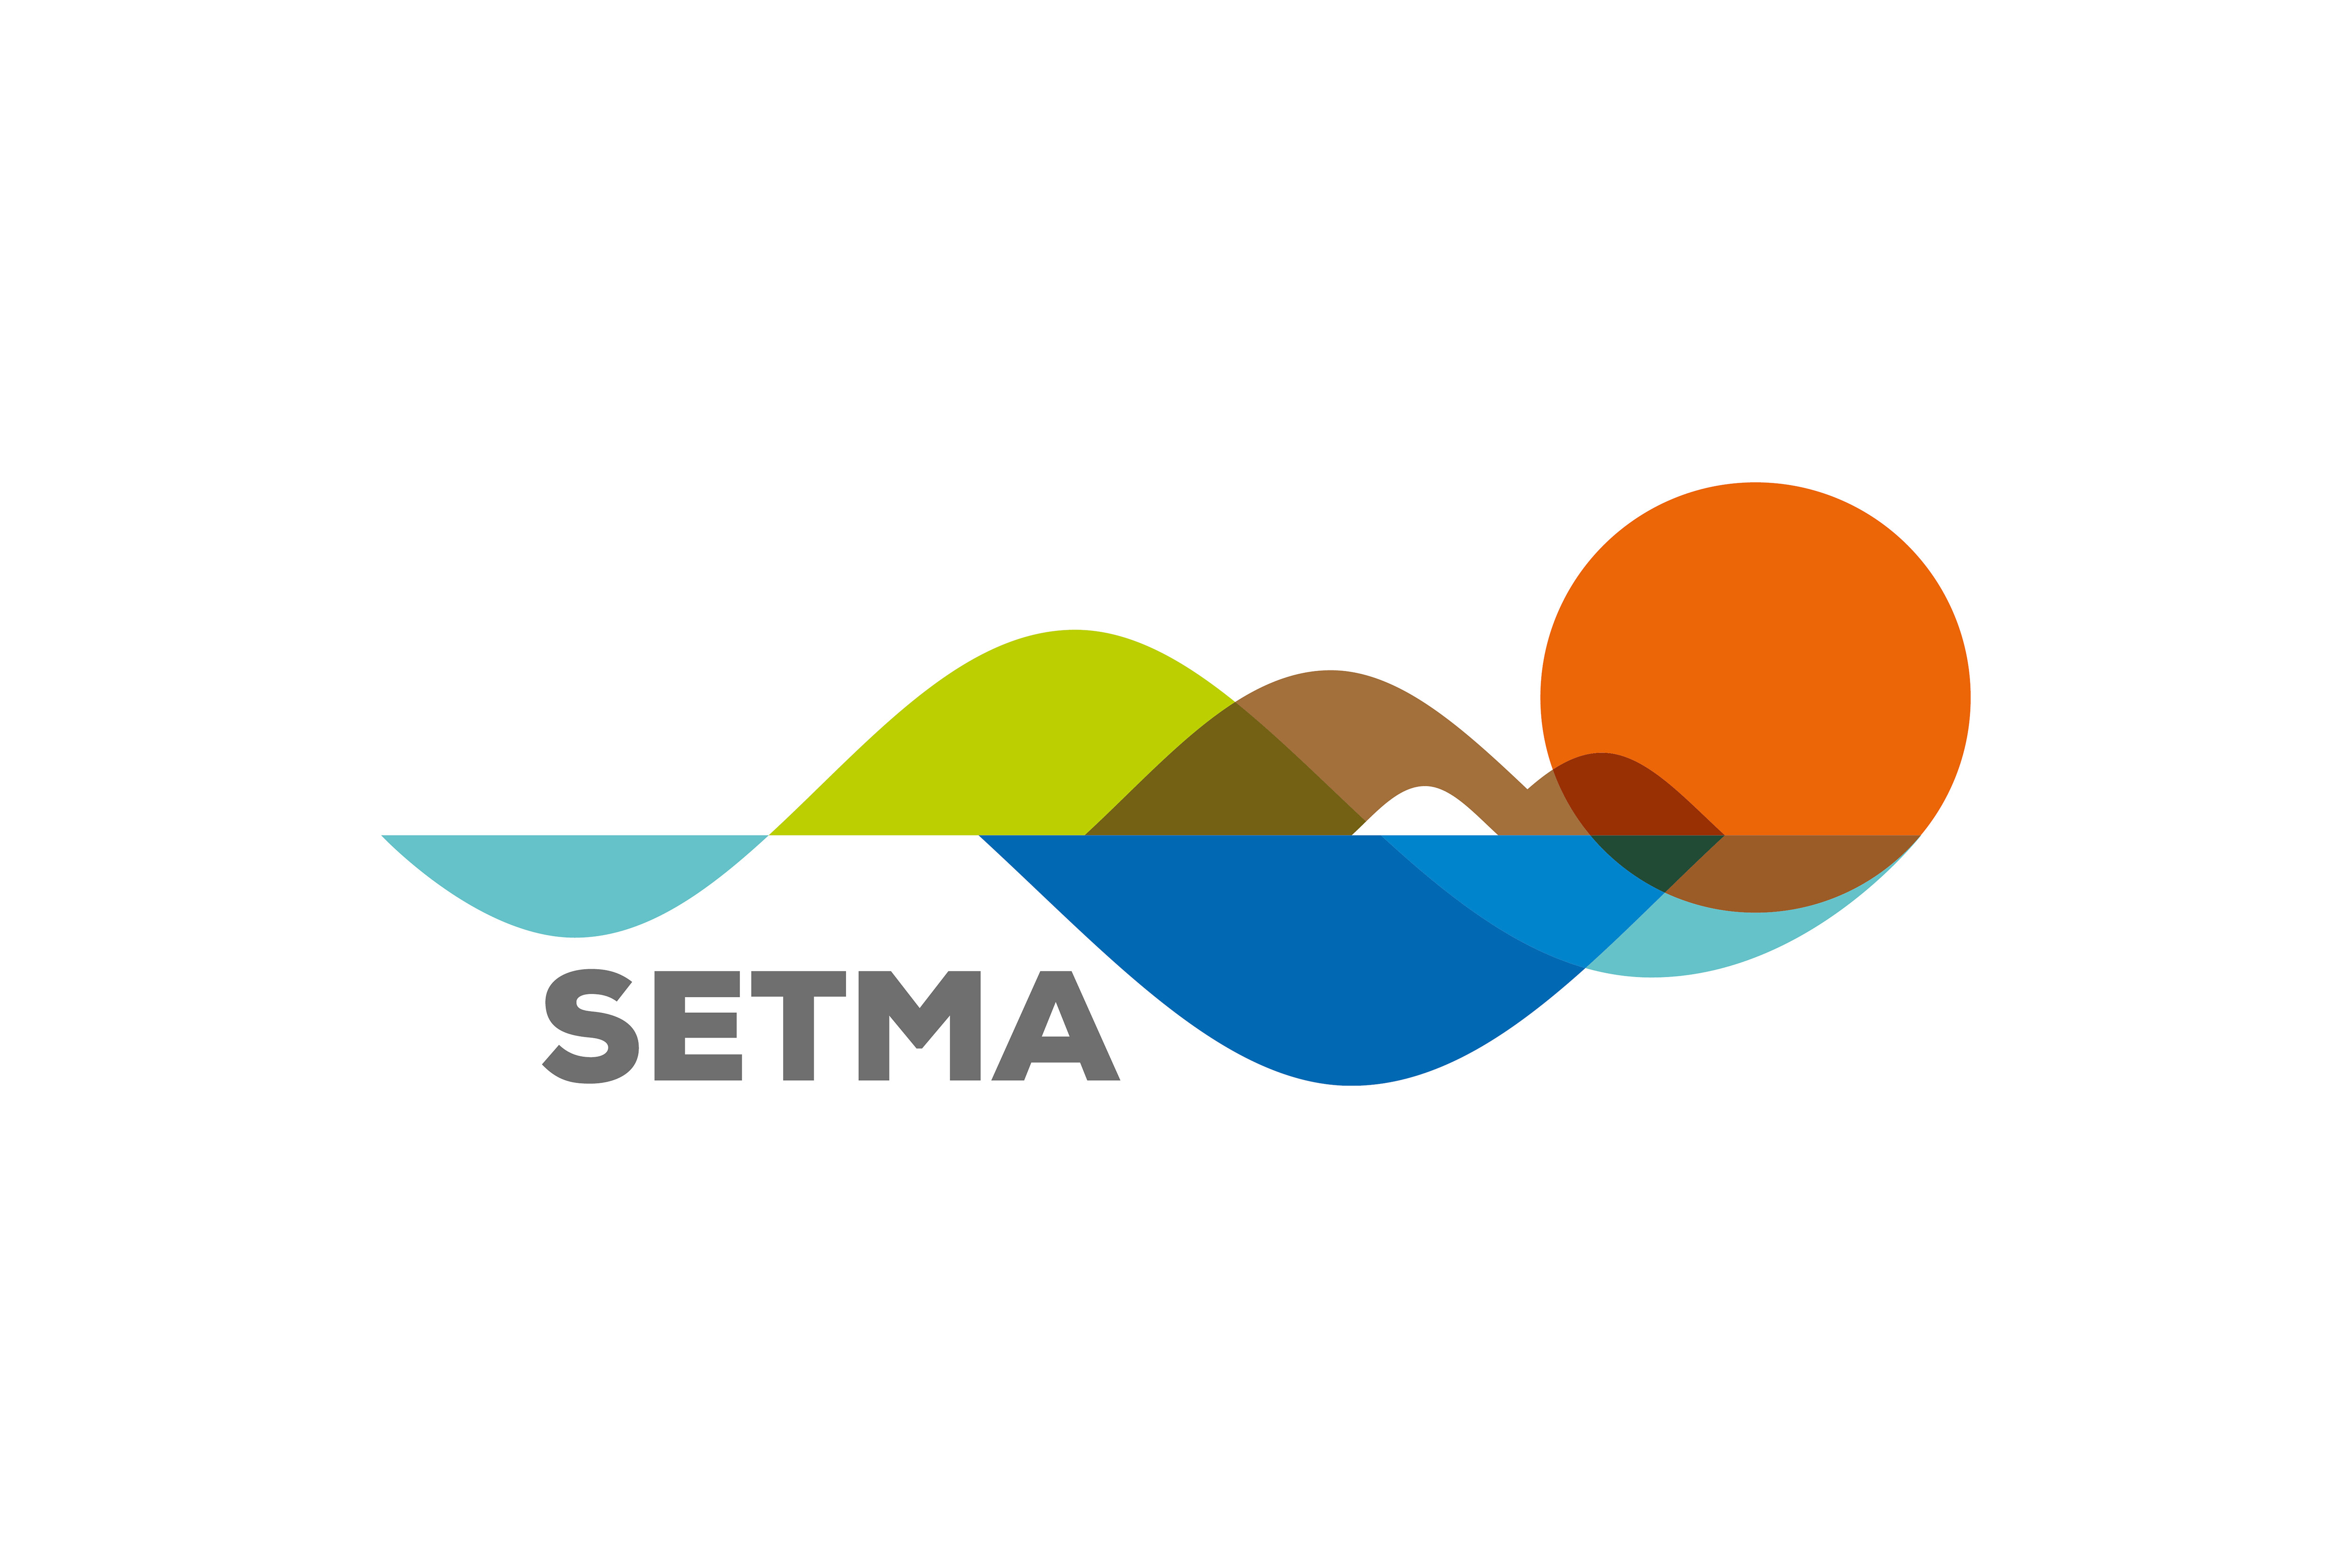 SETMA Brand Design National Contest Winner for the City of Jijoca de Jericoacoara